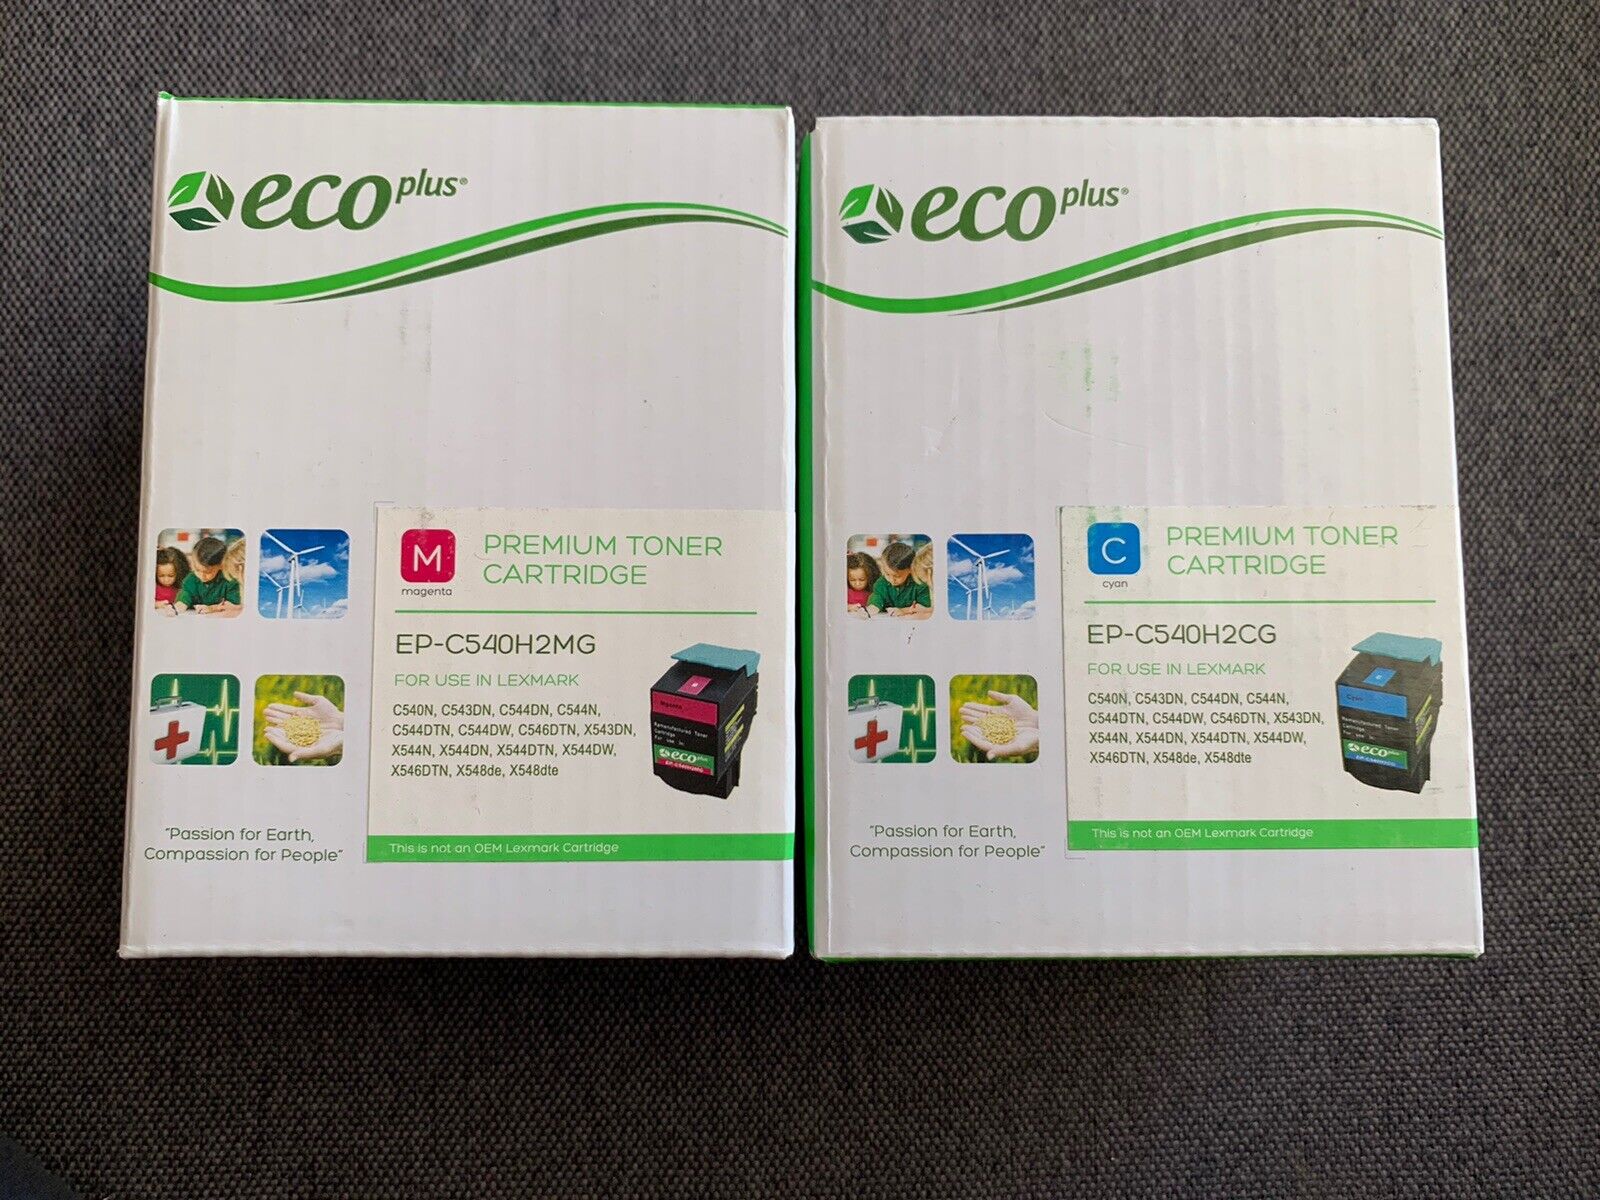 2–ECO Plus Premium Toner Cartridges 1 CYAN& 1 Magenta for use in Lexmark